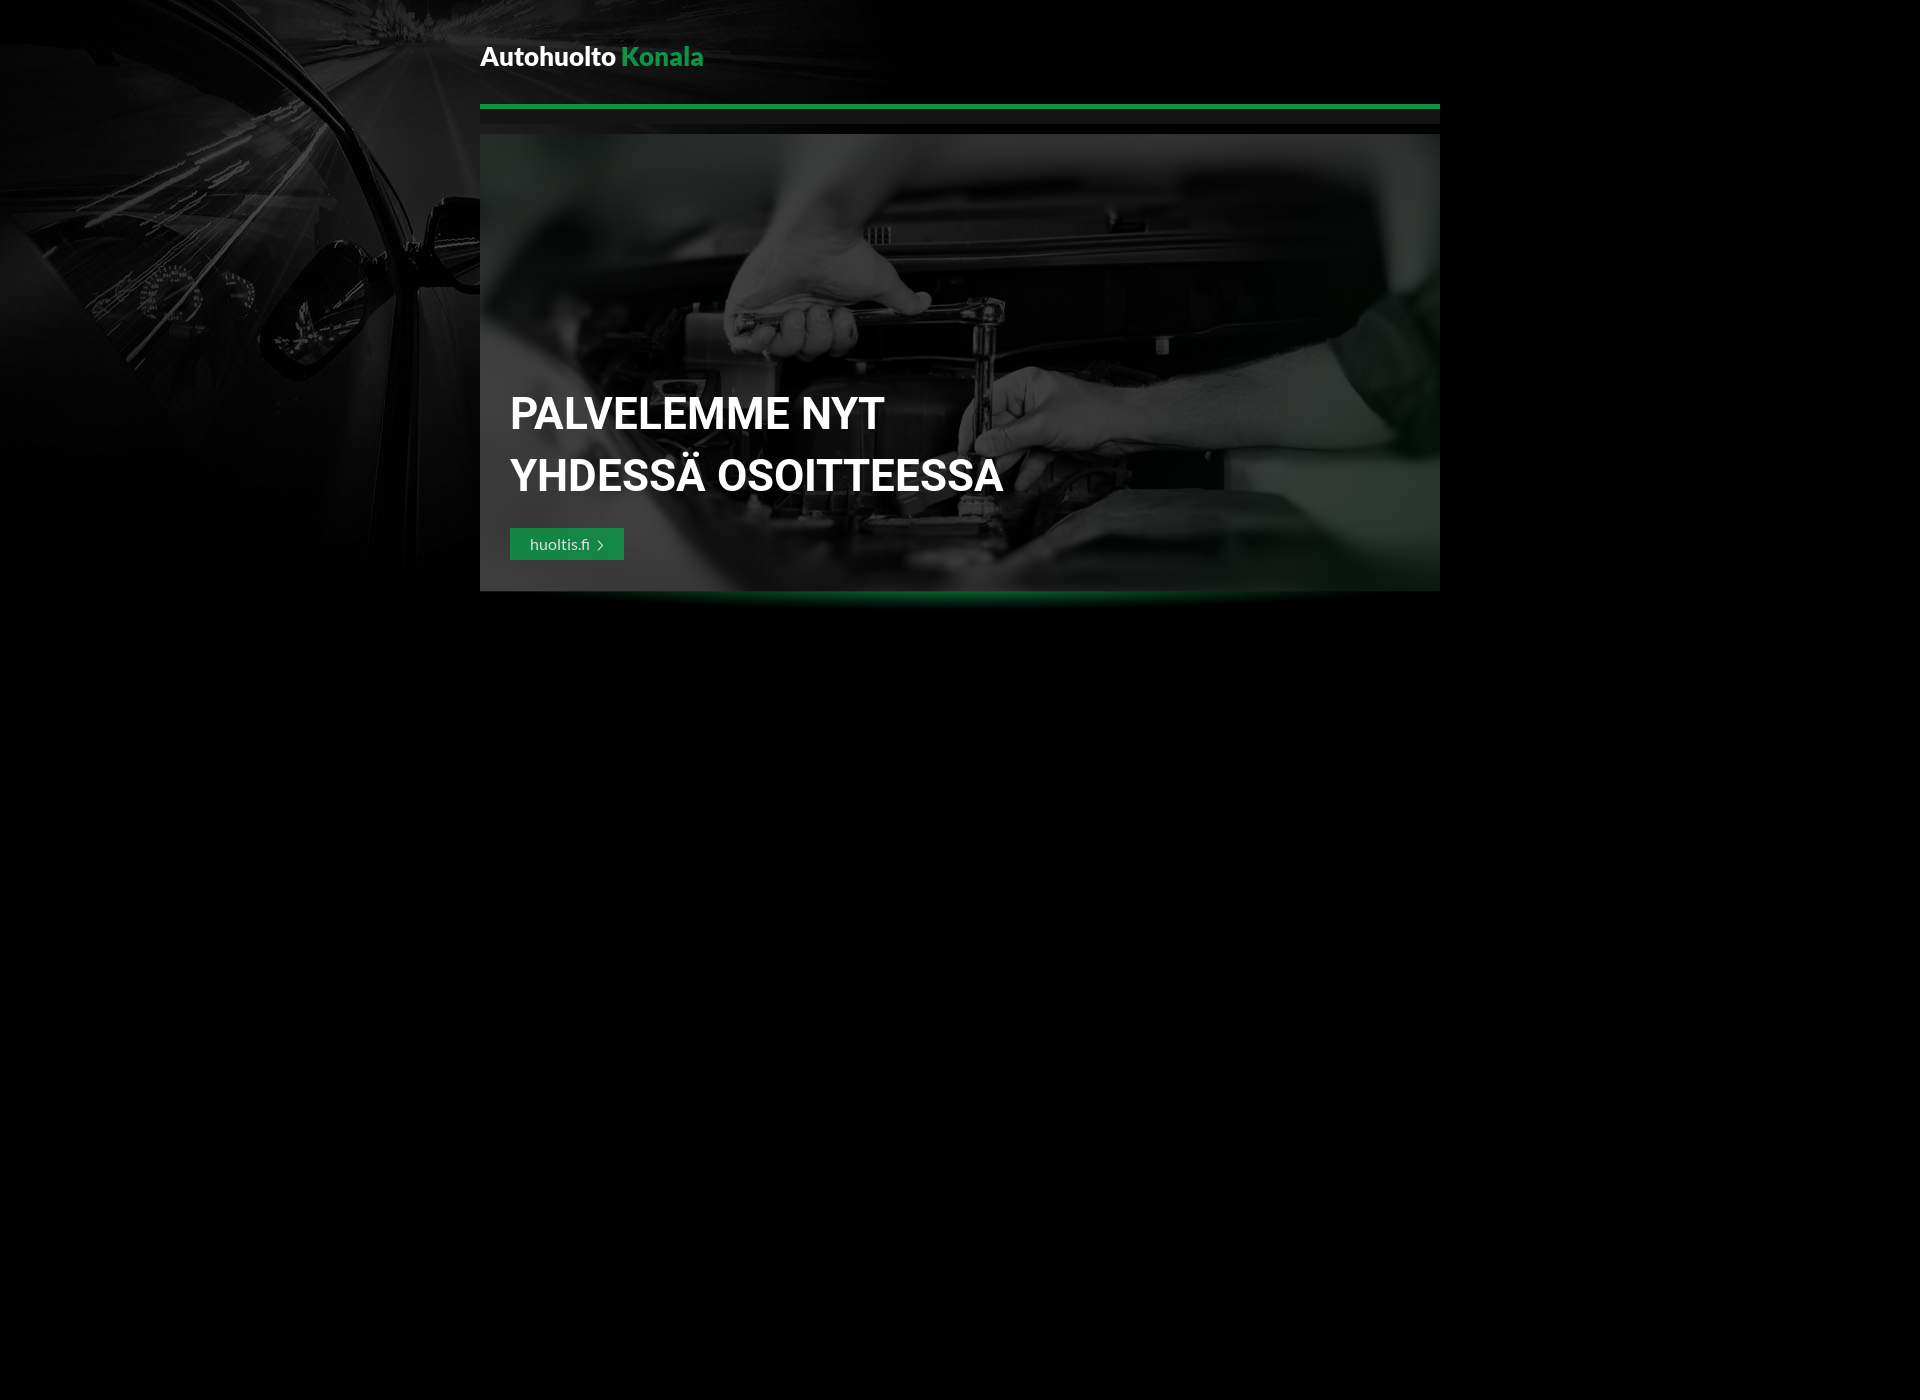 Skärmdump för konalanautohuolto.fi